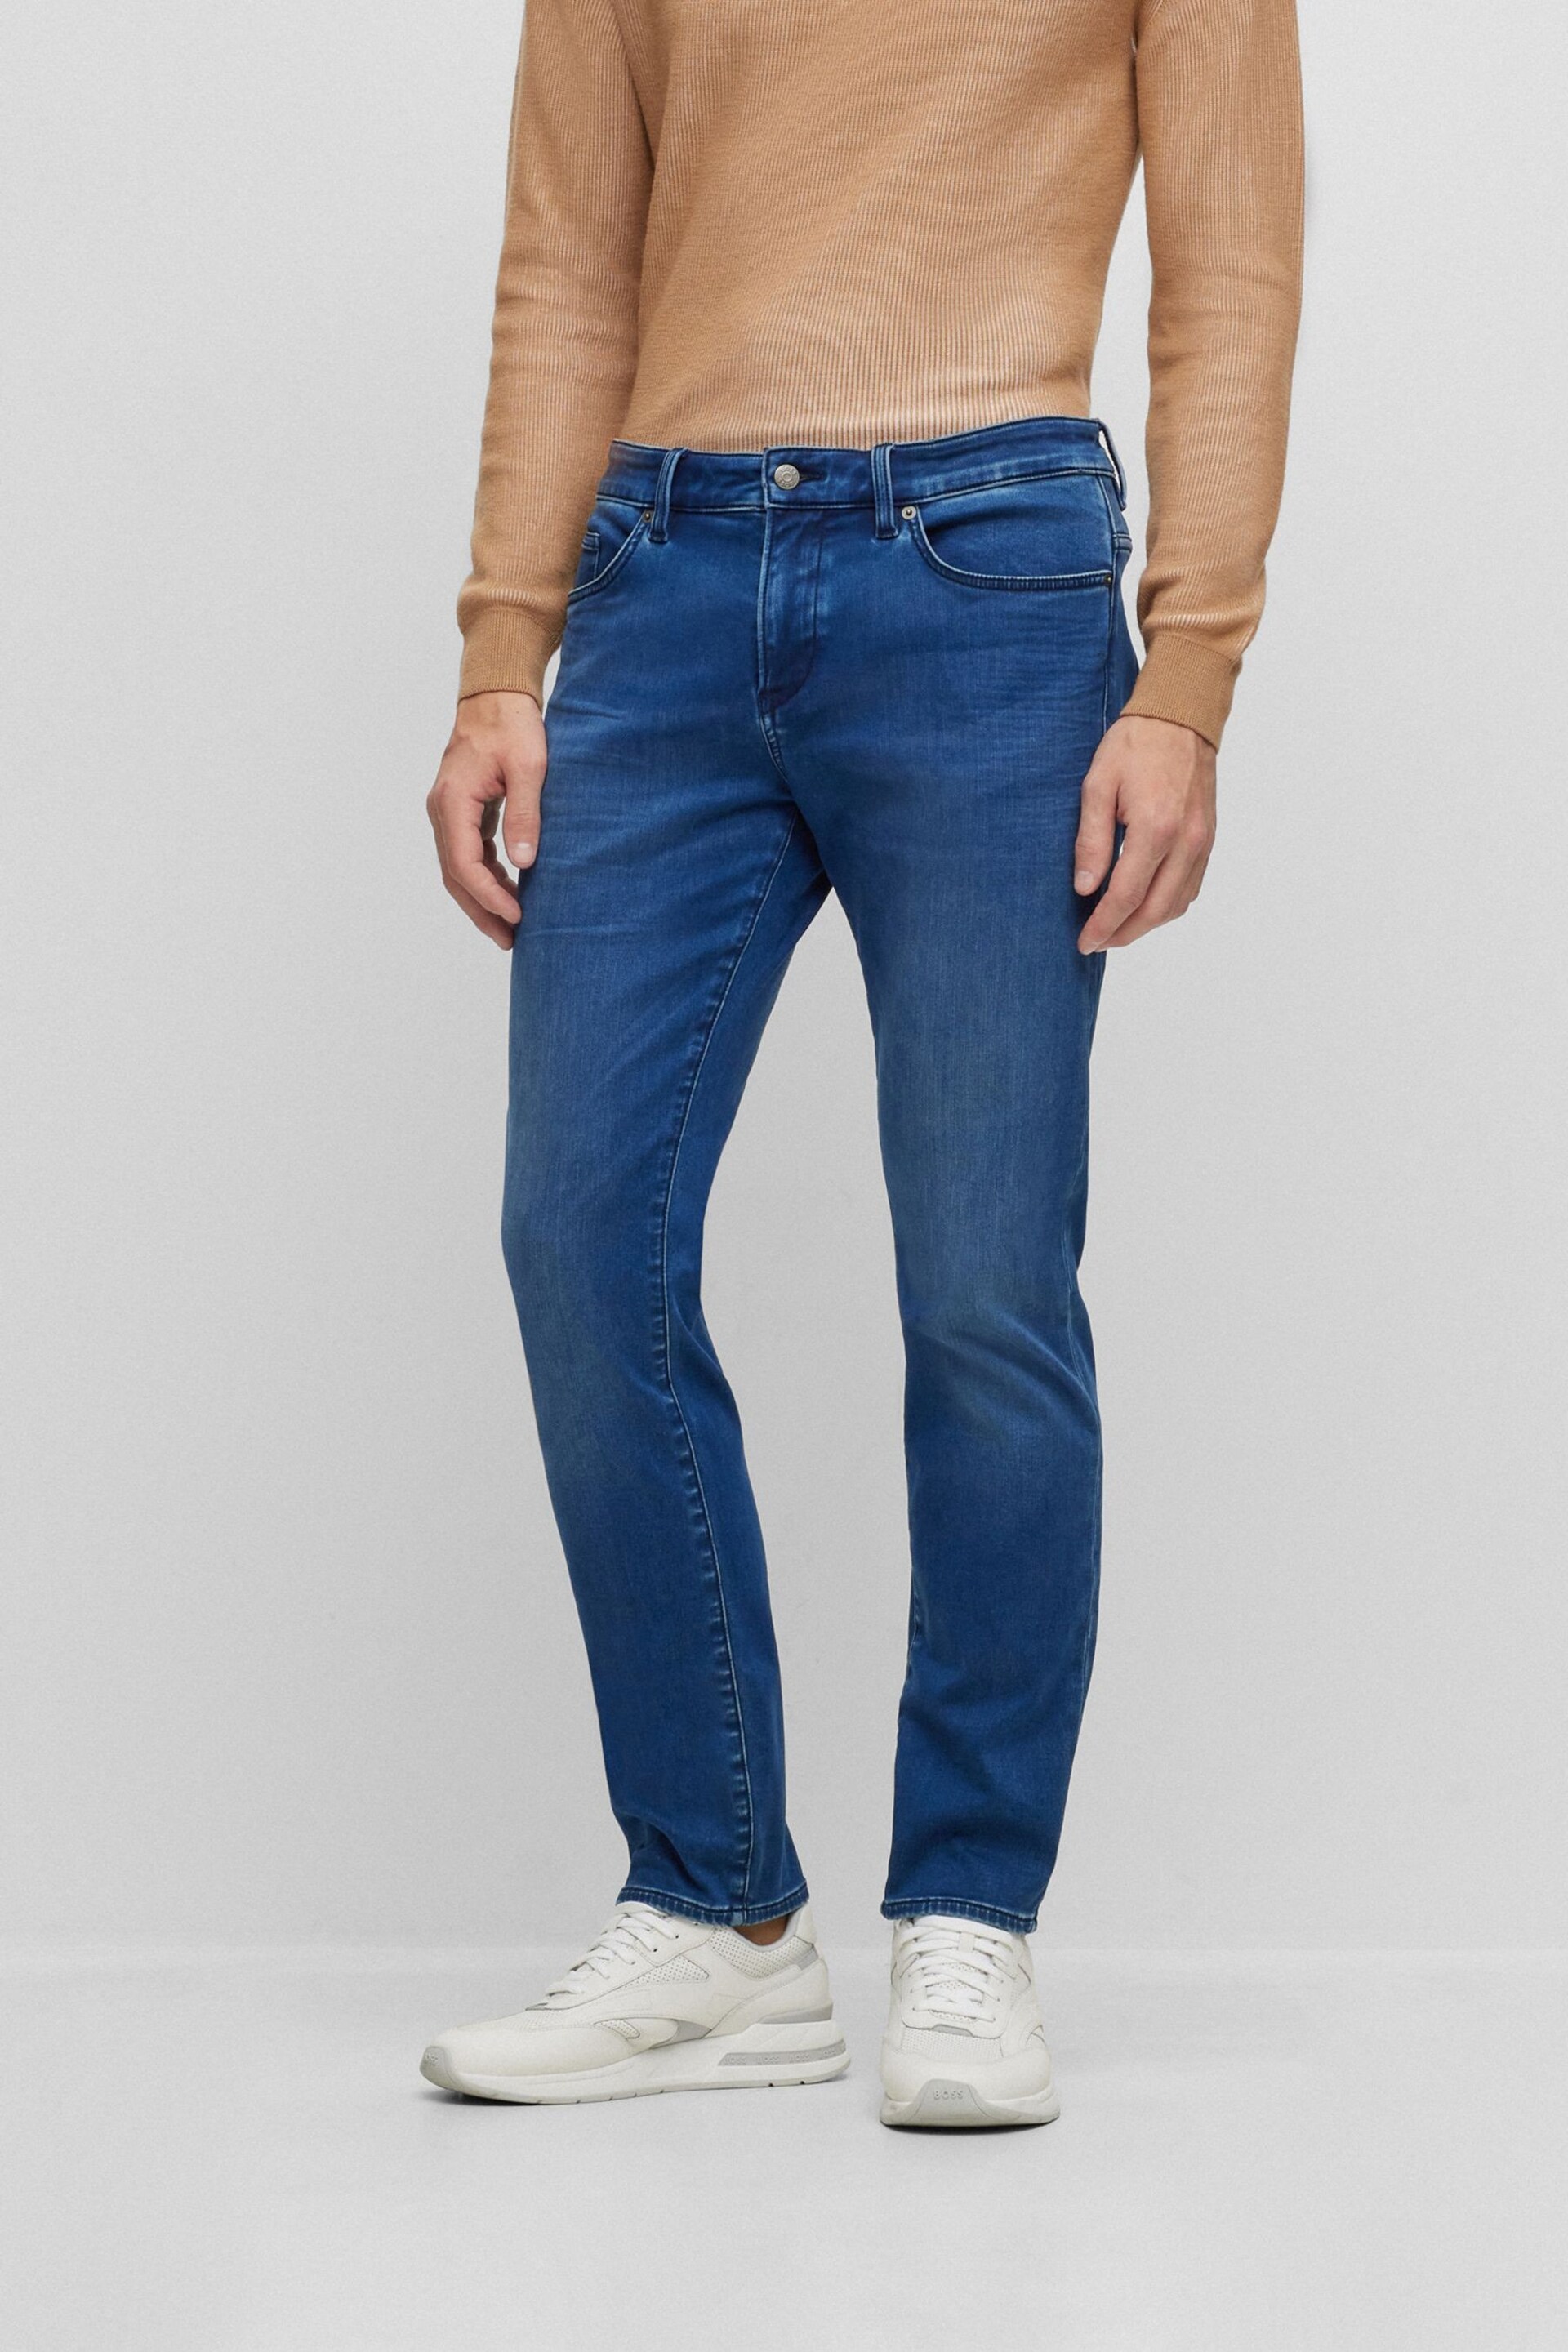 BOSS Blue Delaware Slim Fit Jeans - Image 1 of 5